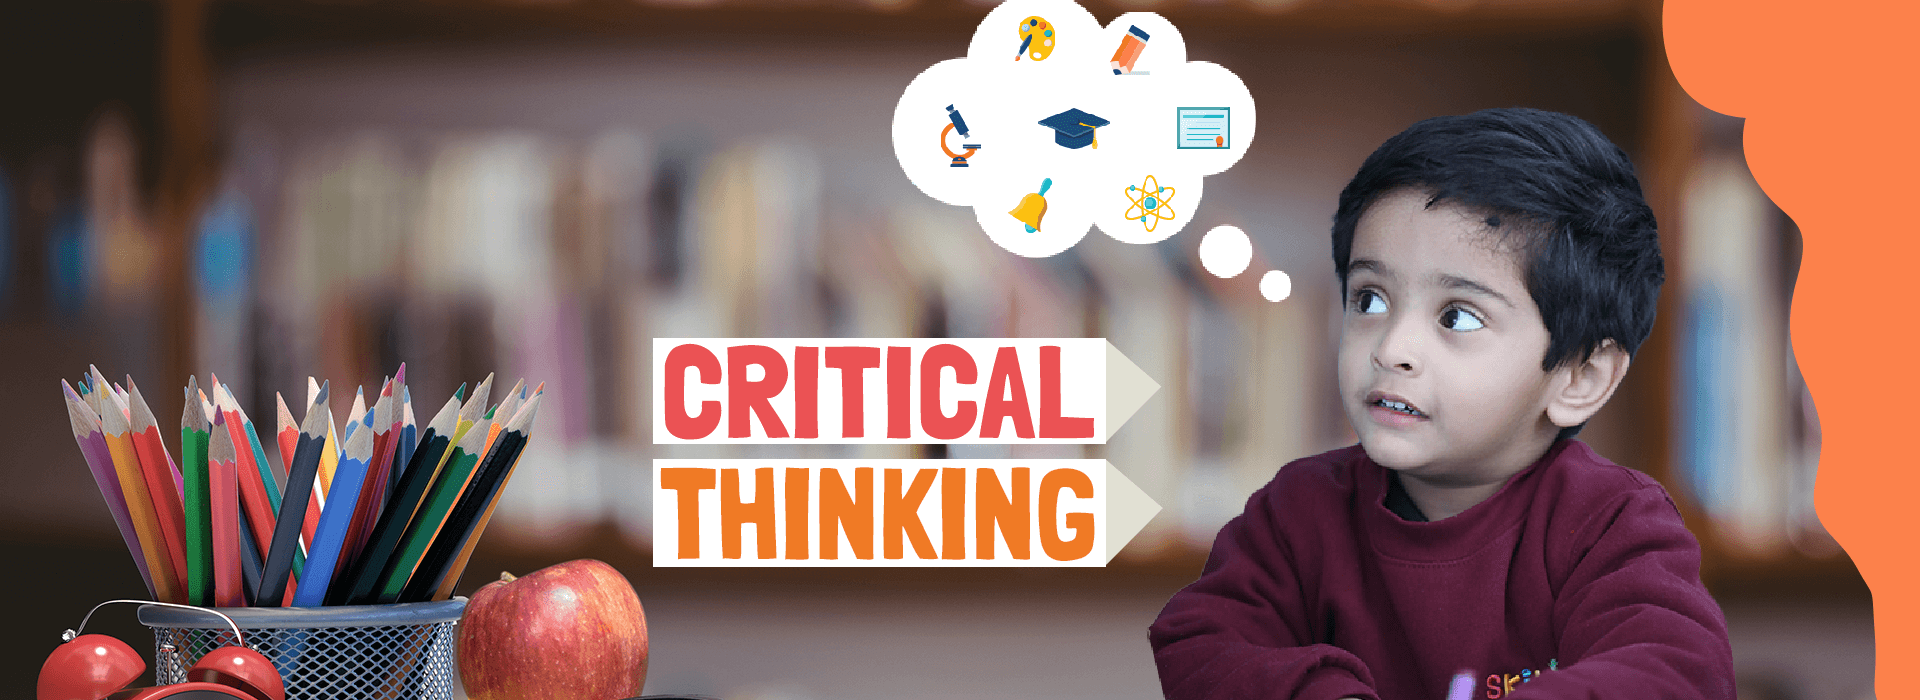 Critical Thinking - Skilled